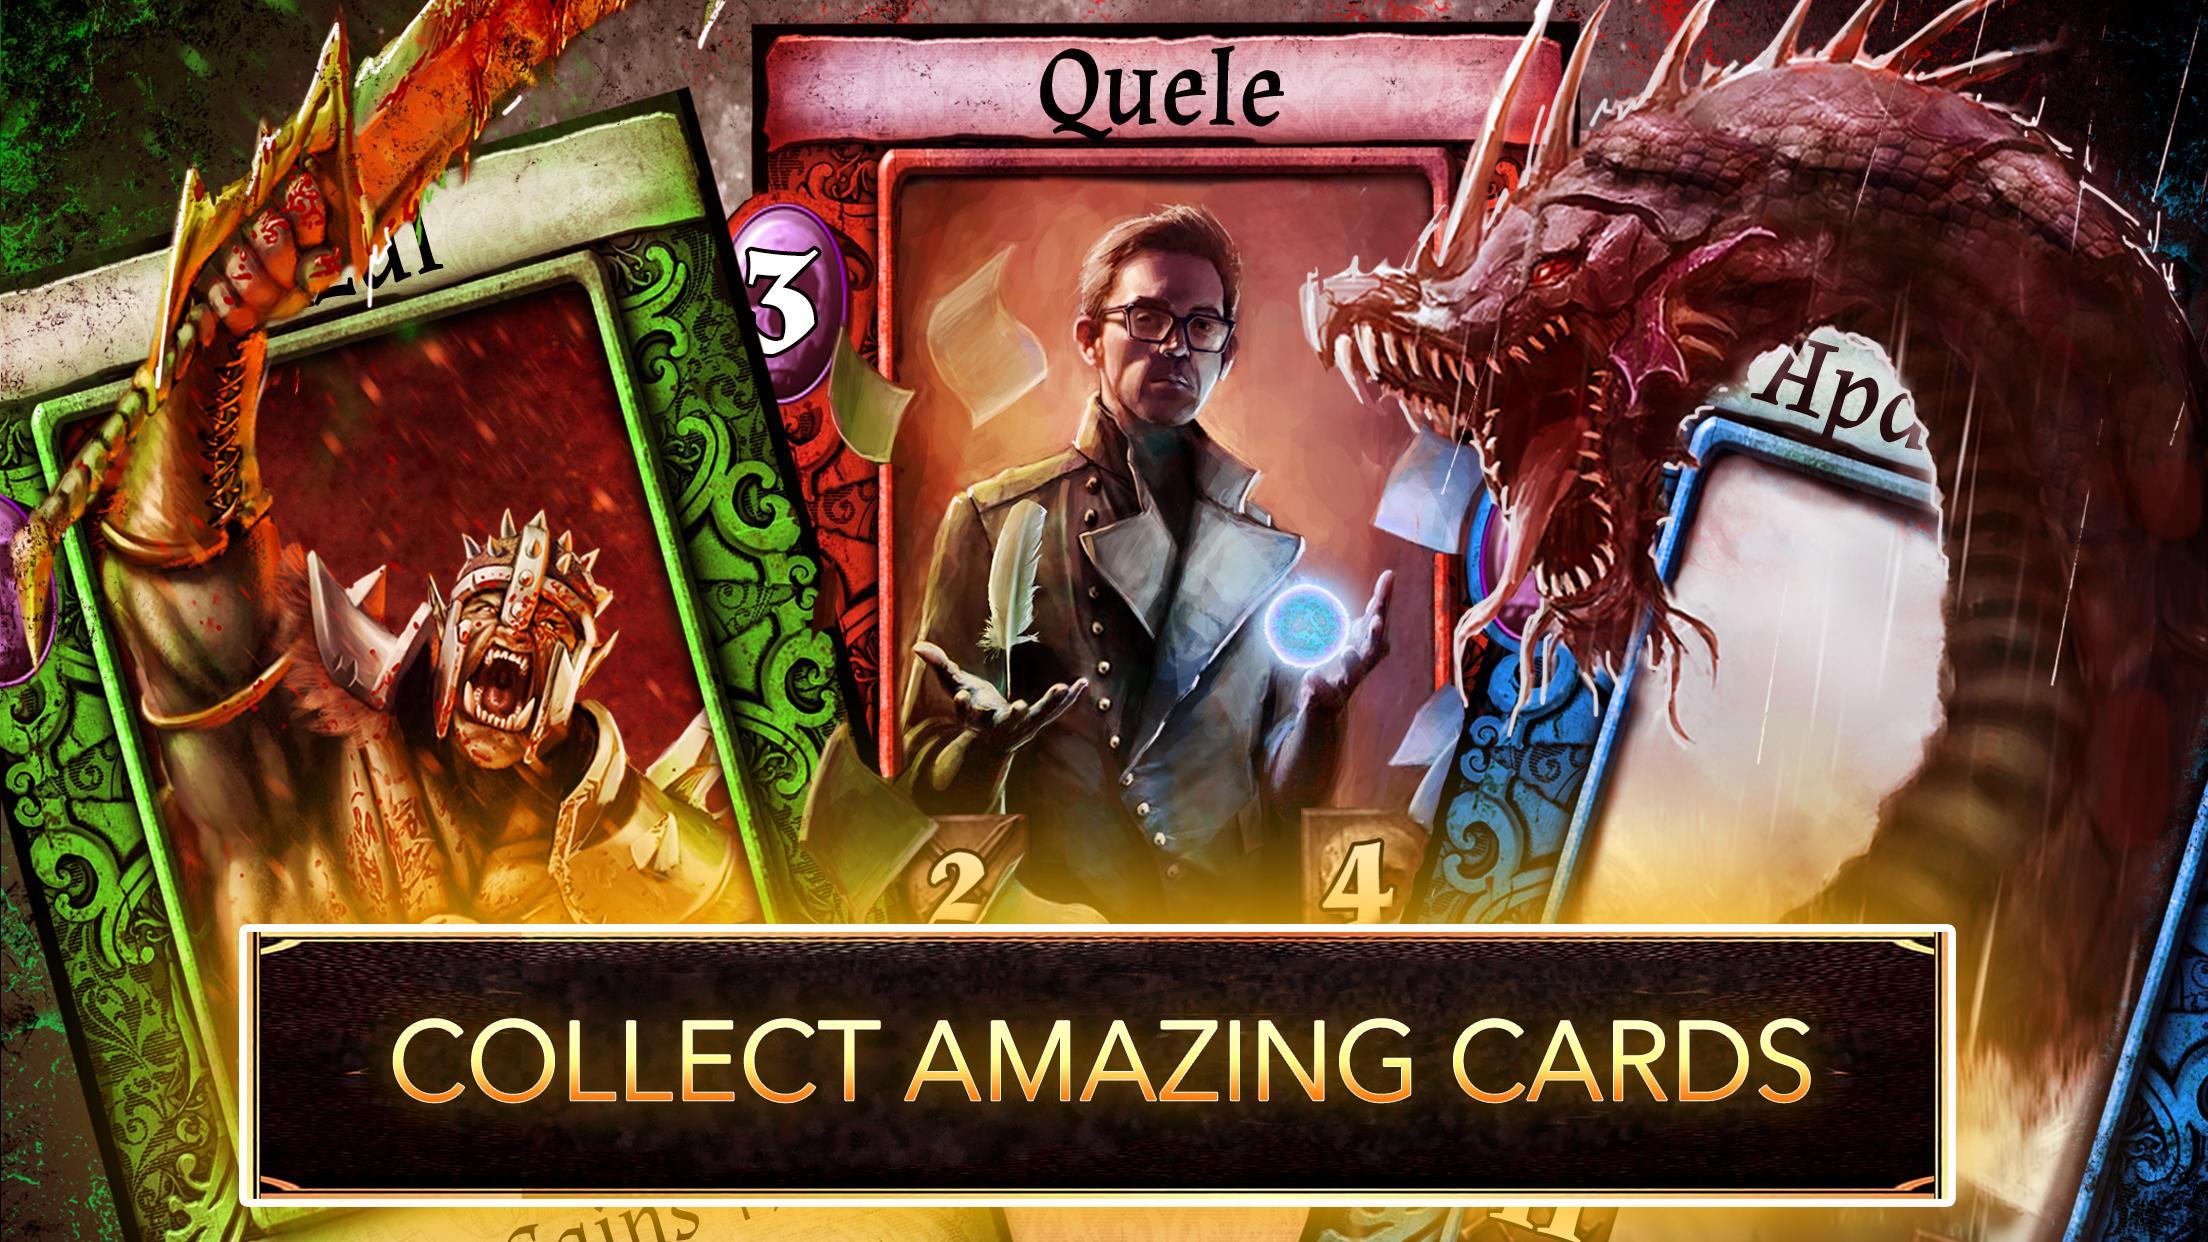 Drakenlords: CCG Card Duels遊戲截圖